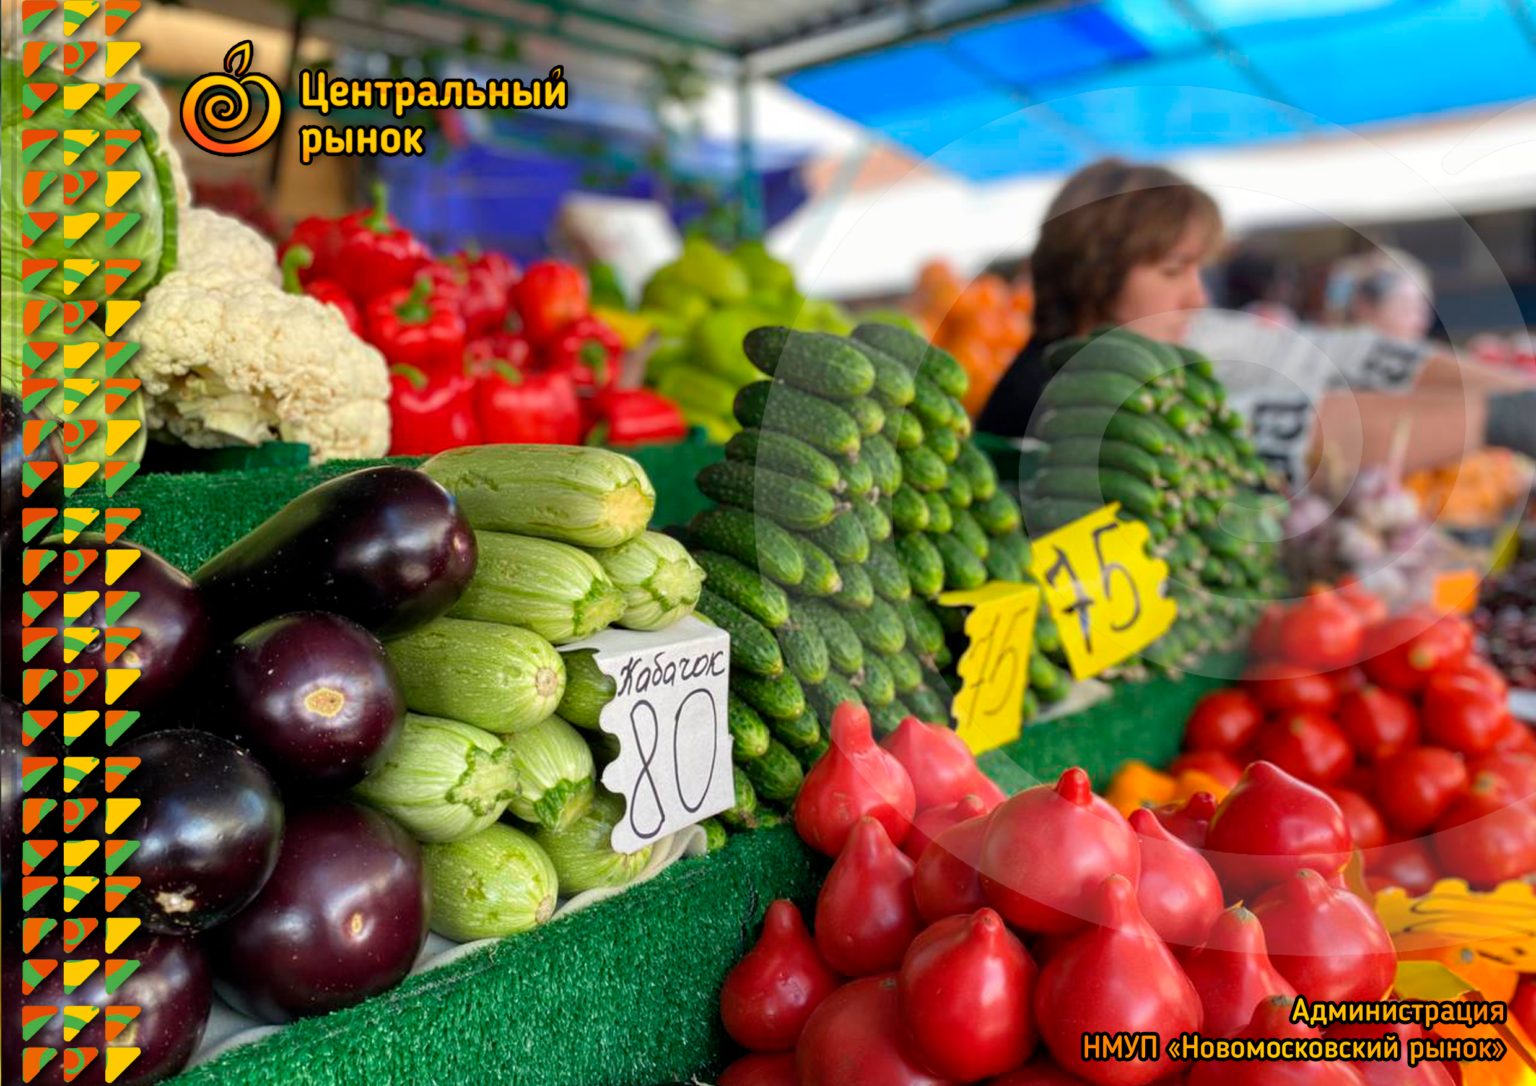 Фруктовый рынок. Центральный рынок. Турецкий рынок овощей и фруктов. Крытый рынок фрукты и овощи. Фруктовый центр